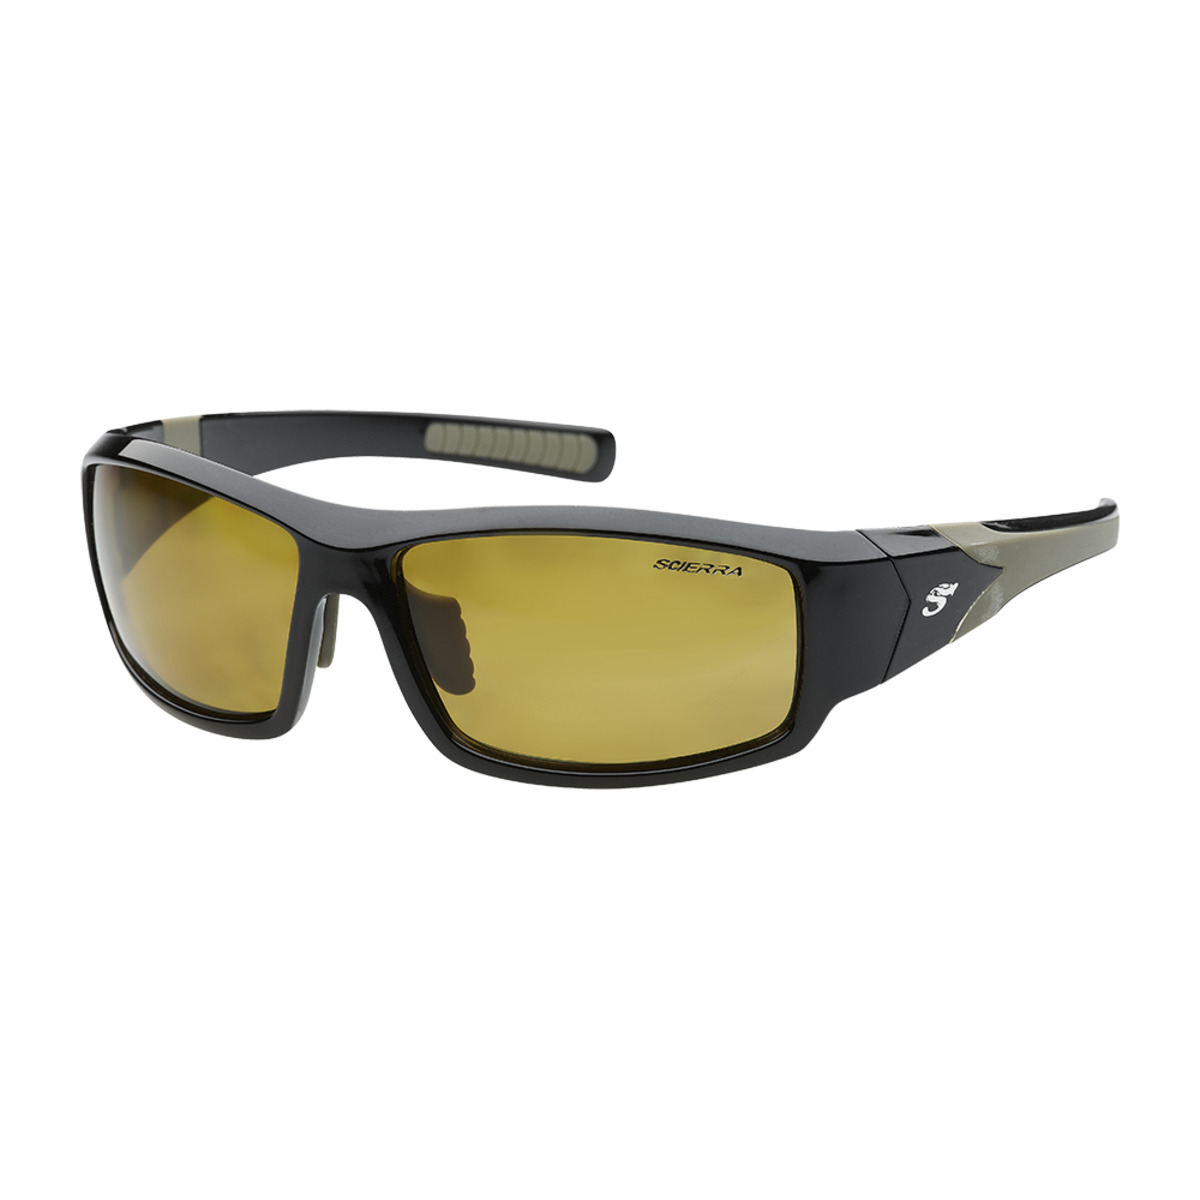 Scierra Wrap Arround Sunglasses - YELLOW LENS